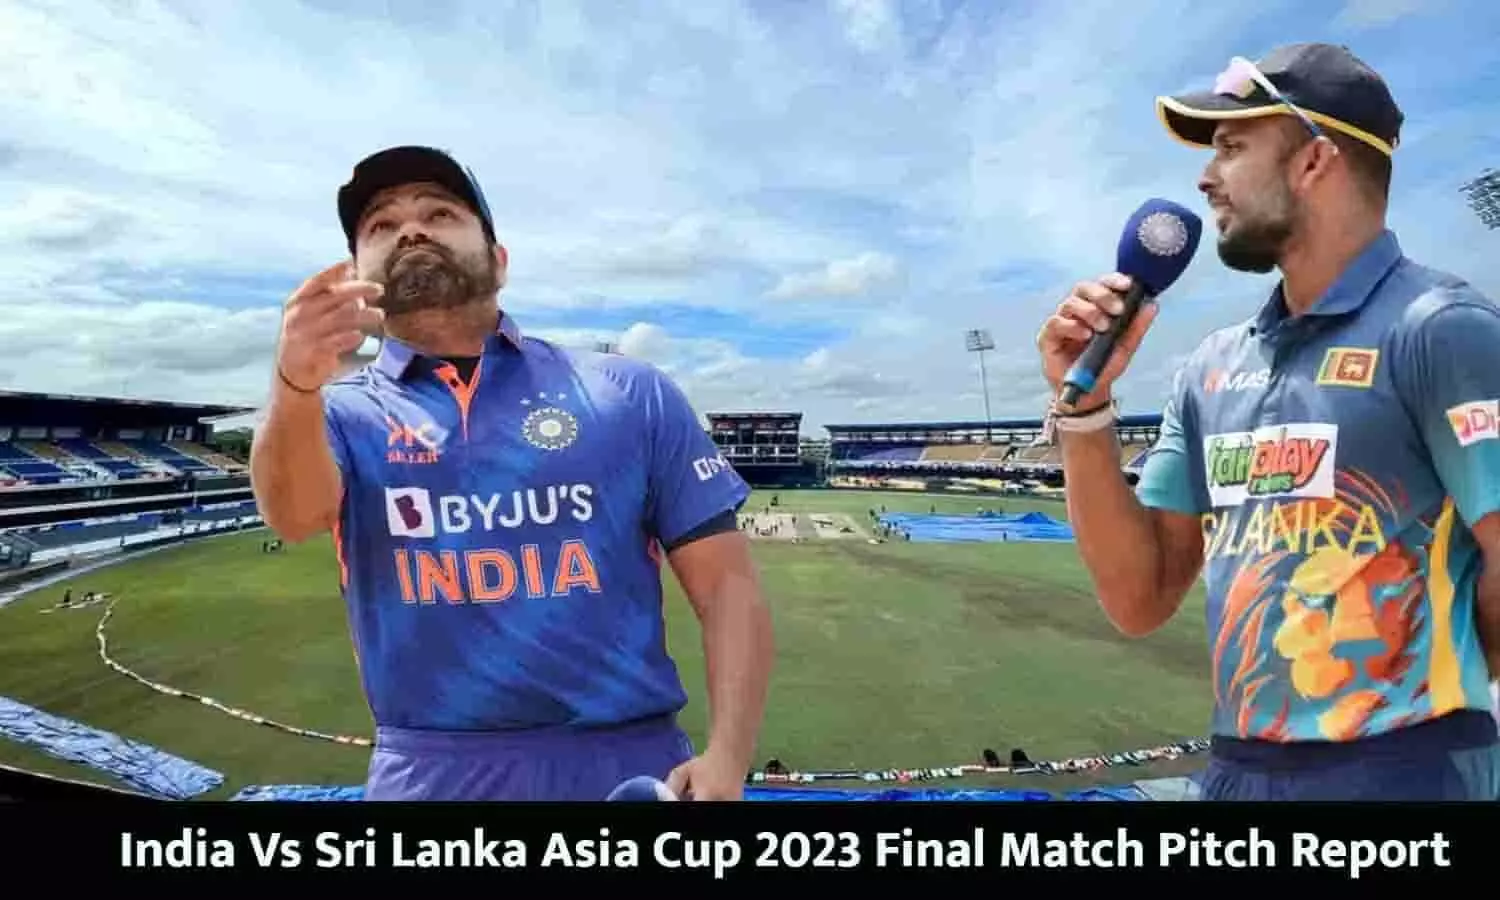 India Vs Sri Lanka Asia Cup 2023 Final Match Pitch Report in Hindi बल्लेबाज या गेदबाज किसके लिए बेस्ट है पिच?